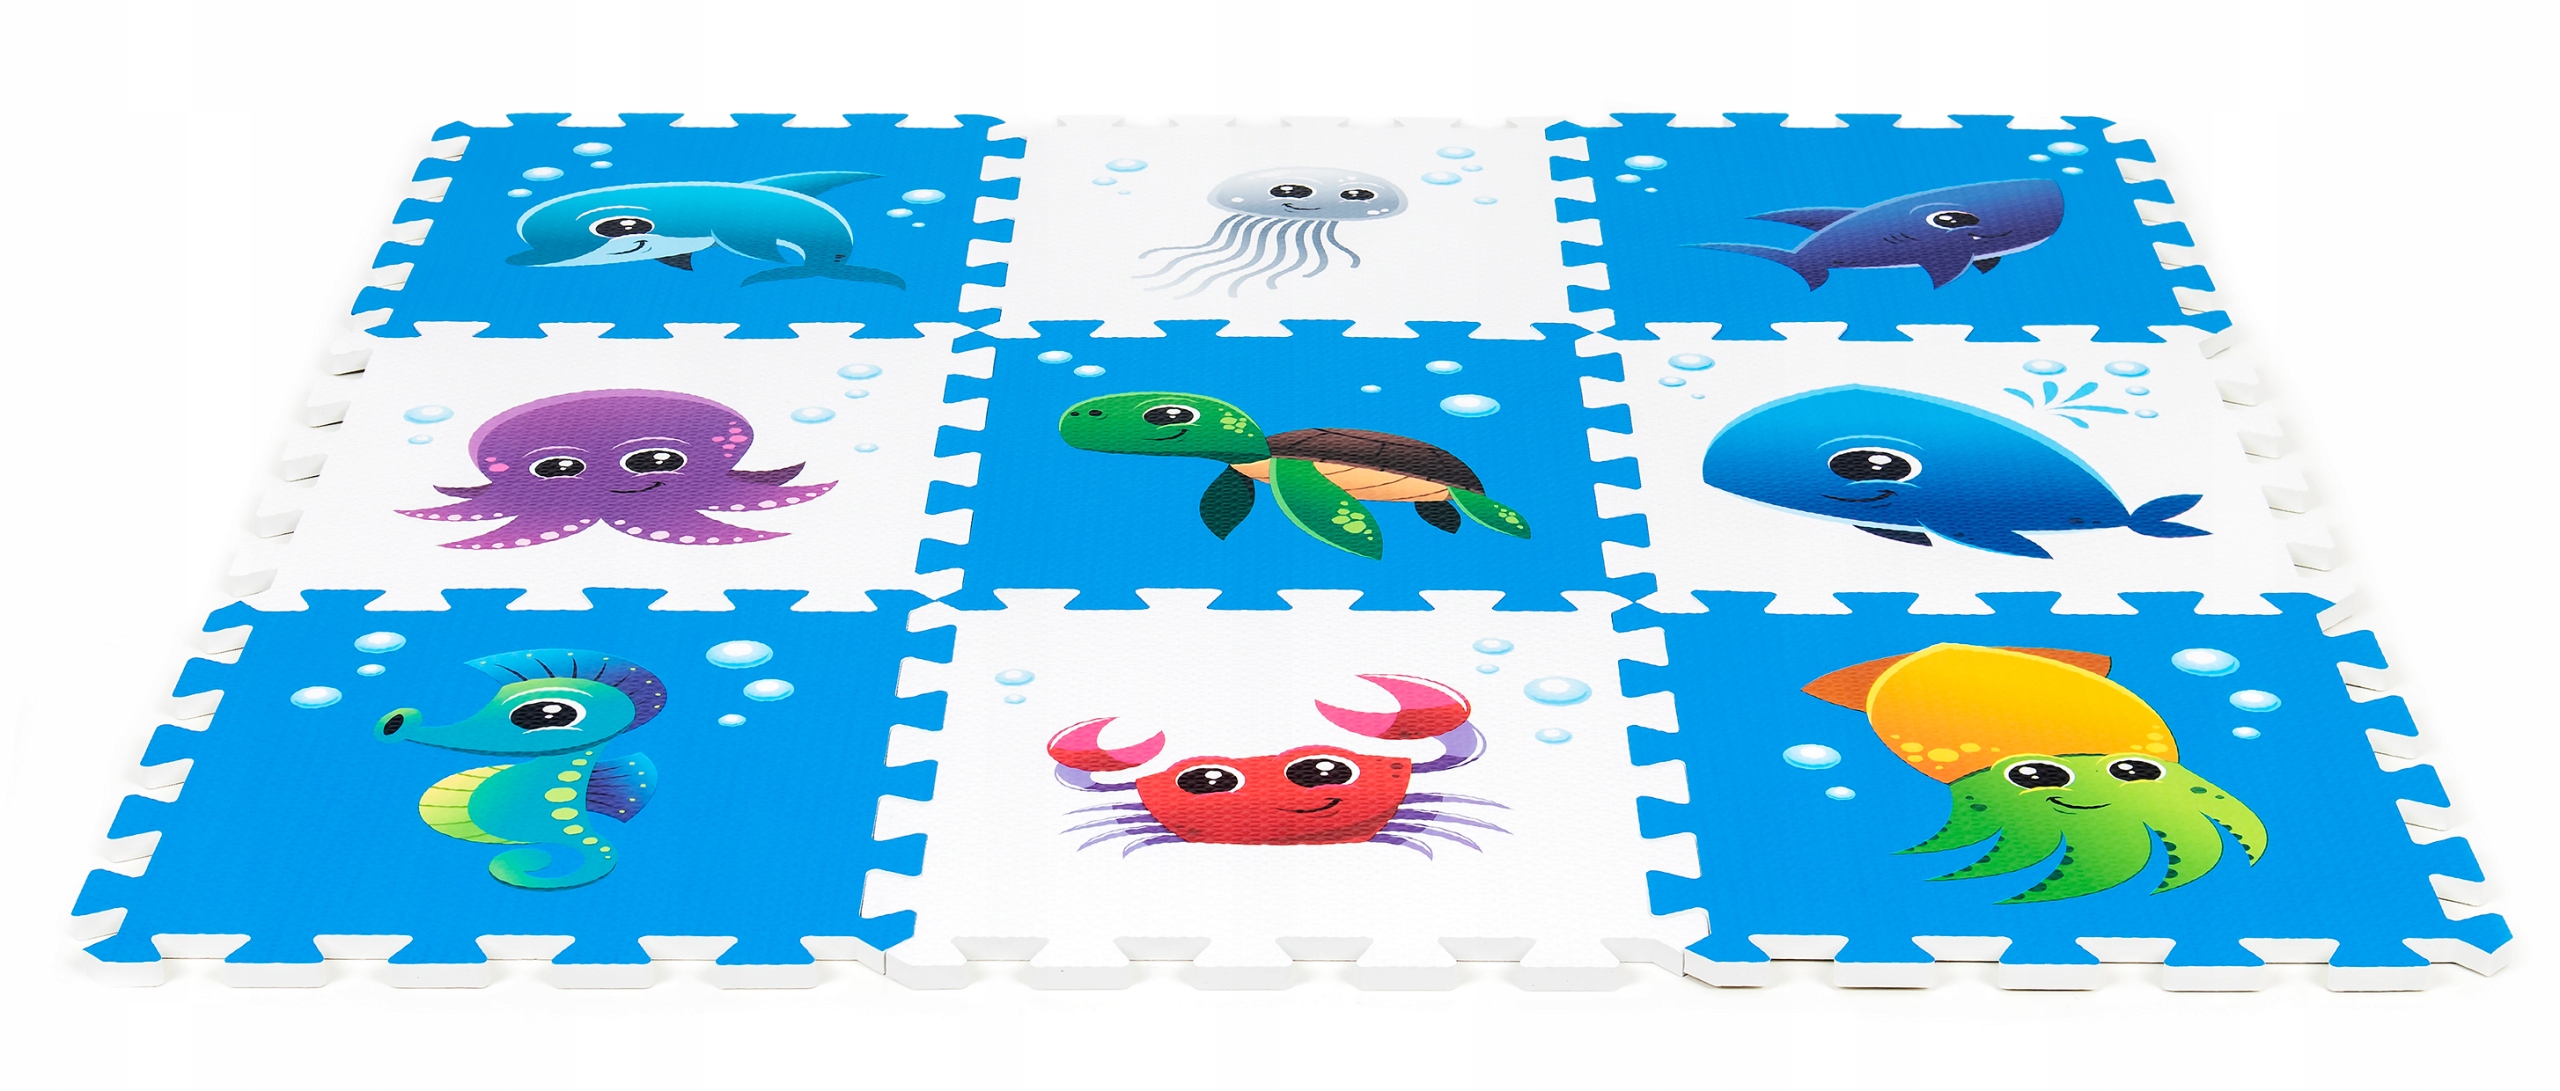 Podłogowa mata puzzle dla dzieci Sapphire Kids SK-84 - Sea